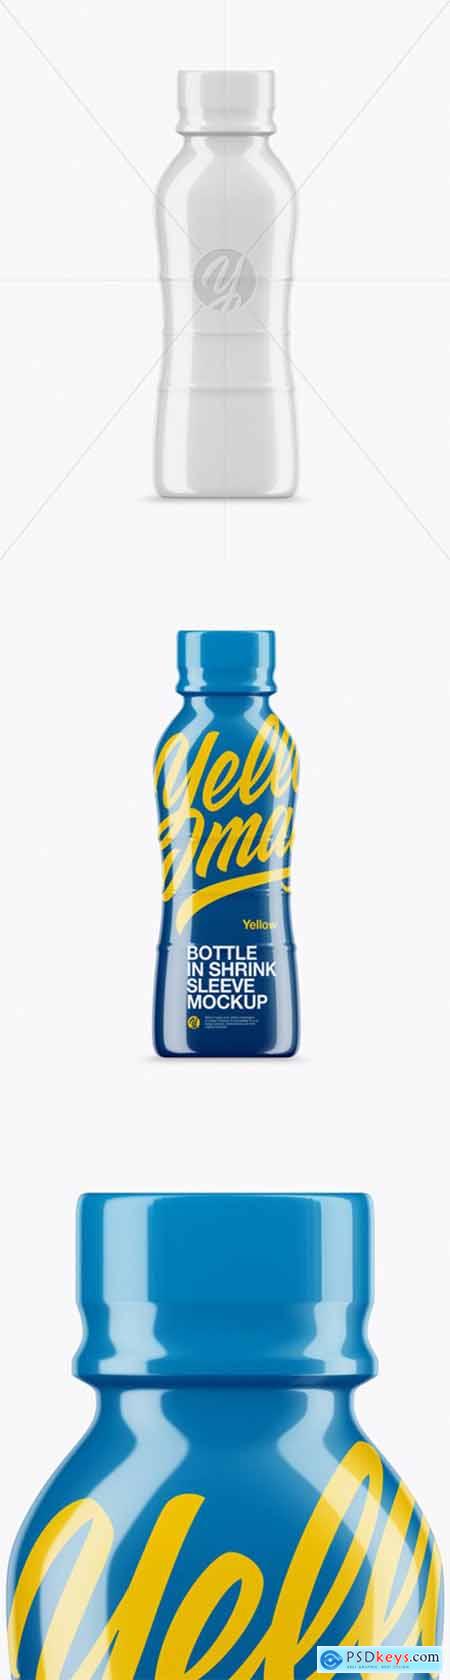 Bottle In Glossy Shrink Sleeve Mockup 20013